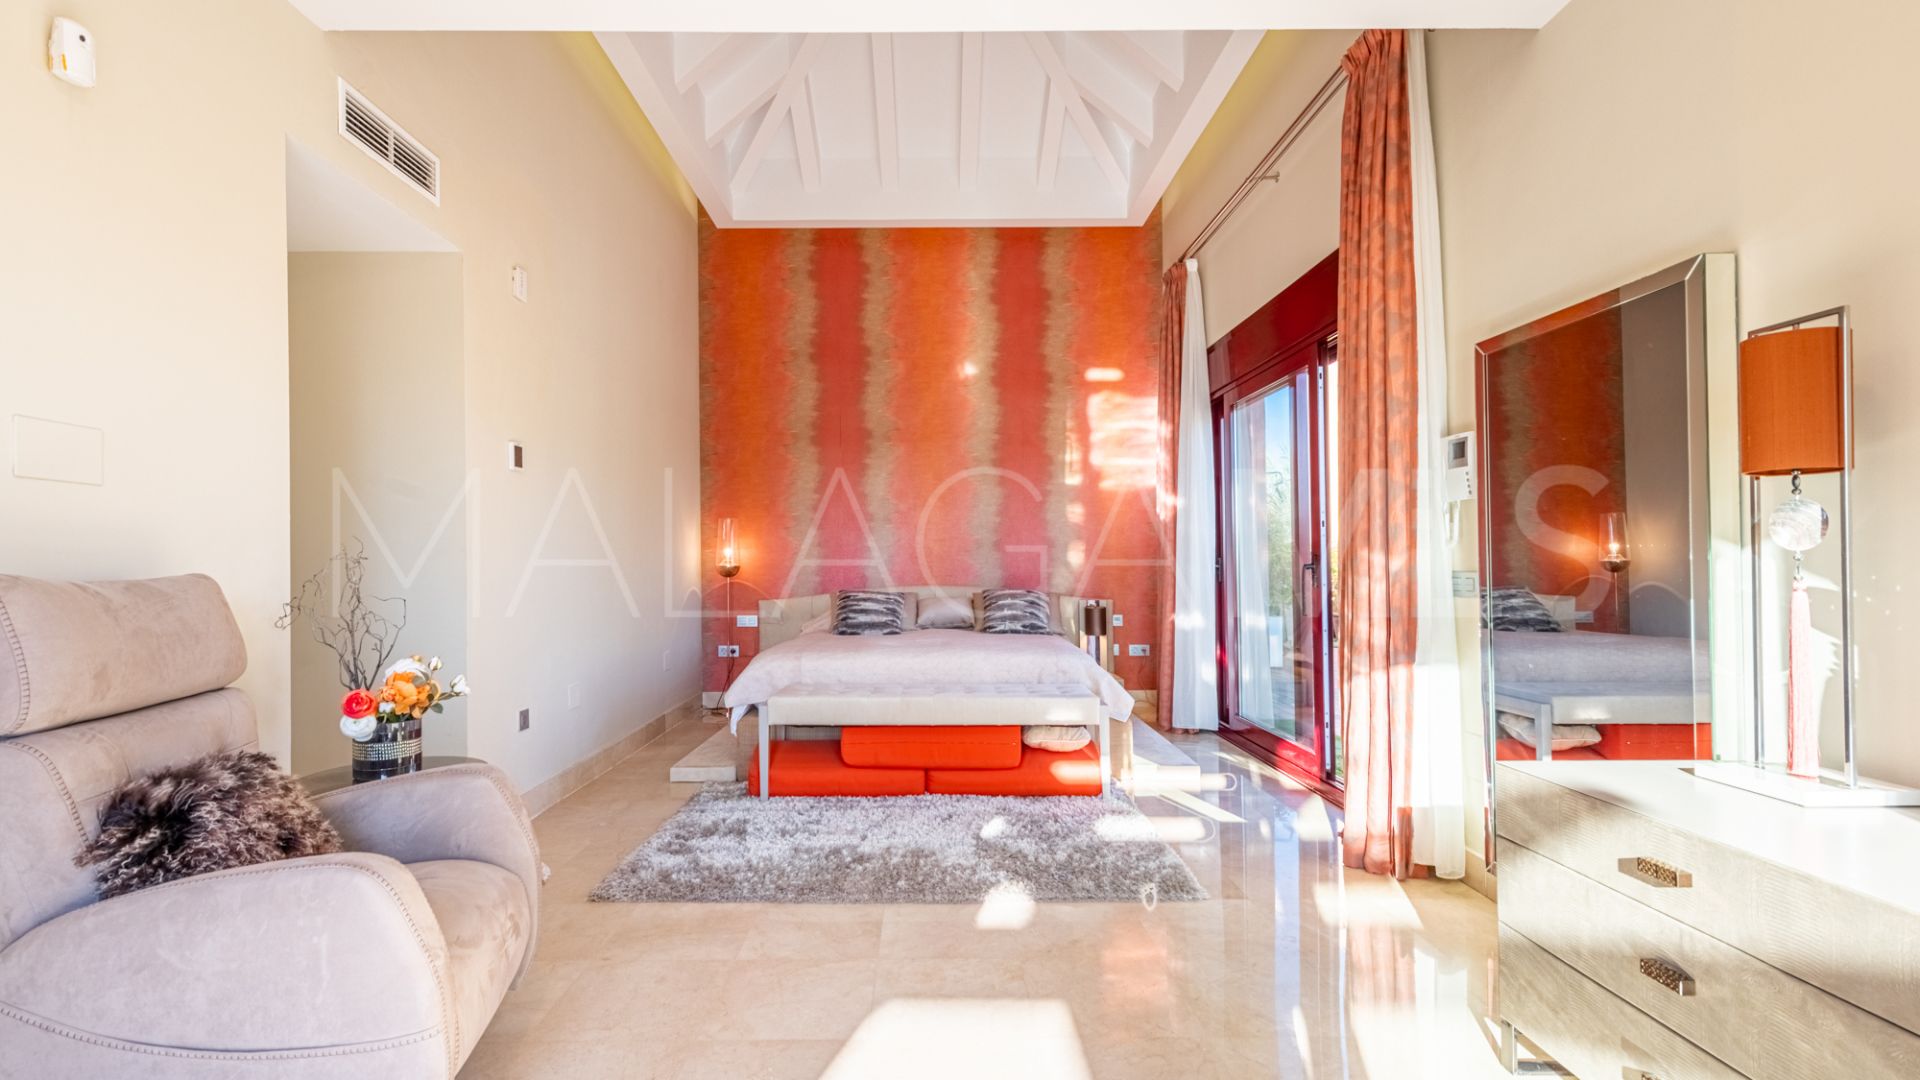 Atico duplex for sale in Bahia Alcantara with 3 bedrooms